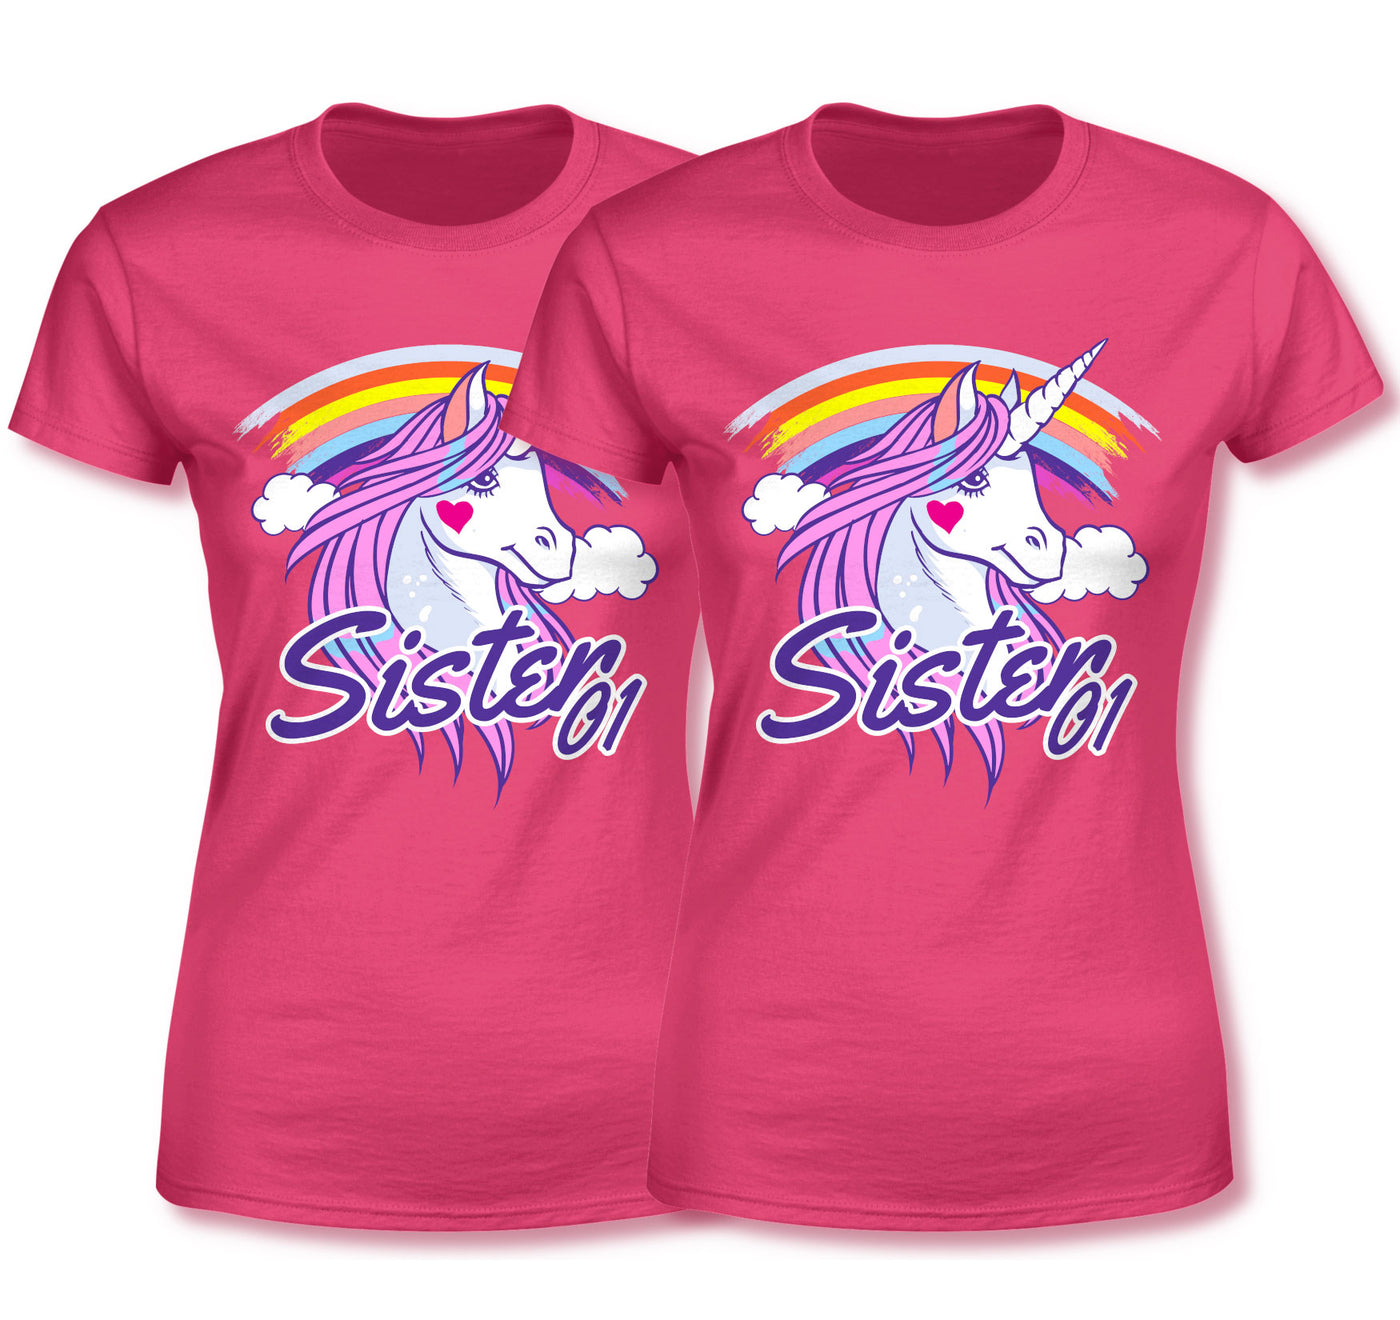 sister-01-unicorn-pink-dd115wts